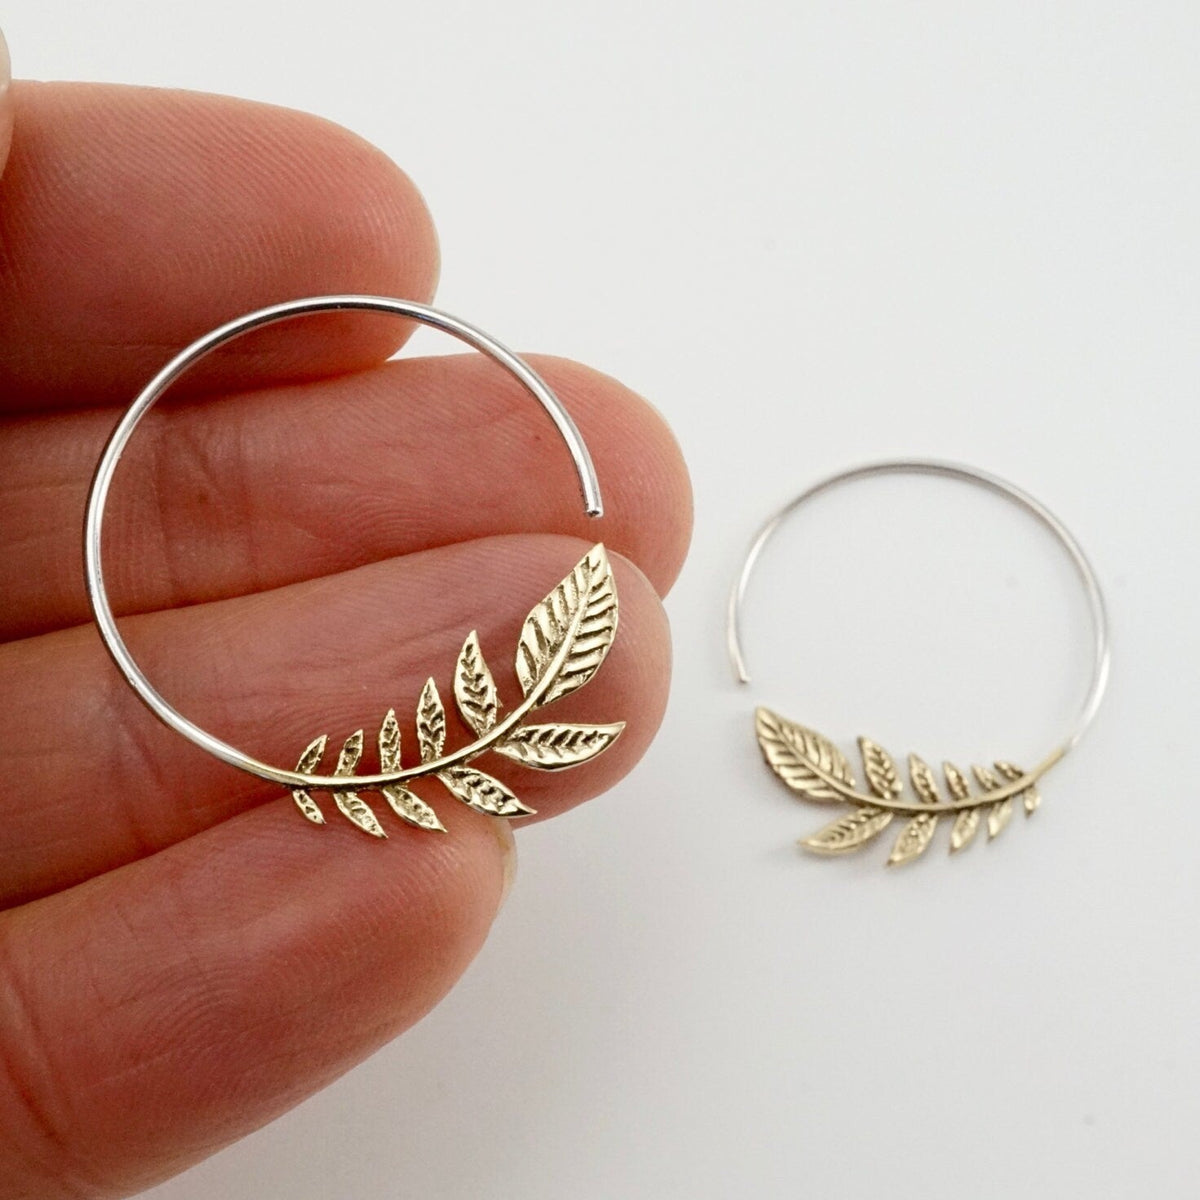 Olive Leaf Earrings - Brass with solid sterling silver hoop - Peace Earrings